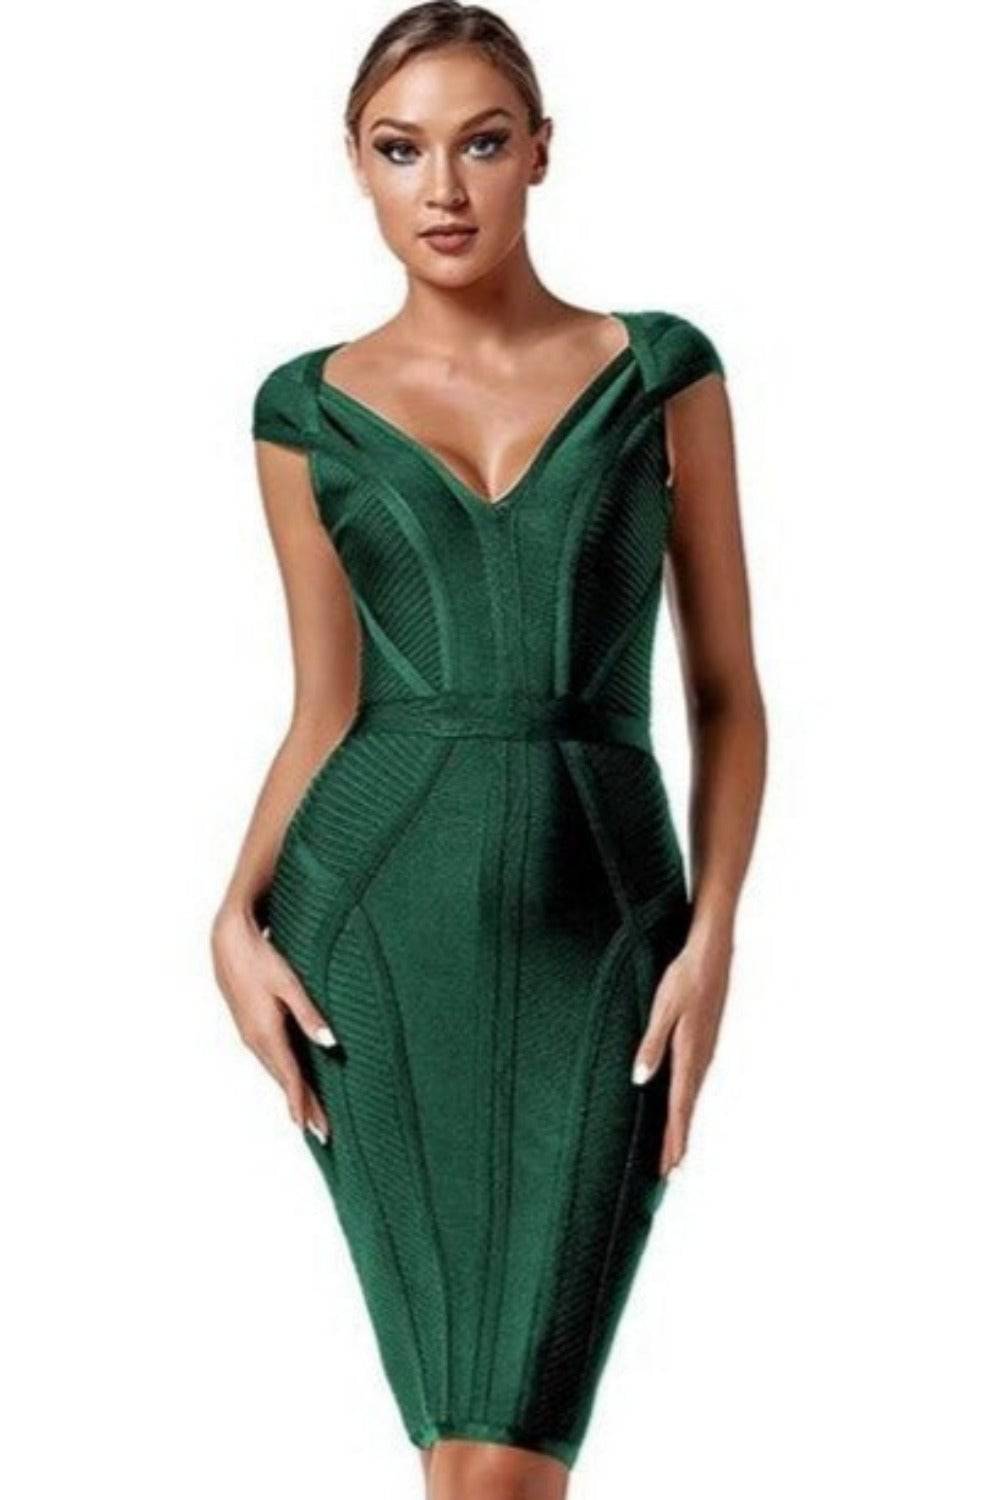 Loren Runway Elegant Short Sleeve Striped Green Bandage Bodycon Dress - TGC Boutique - Green Bodycon Dress